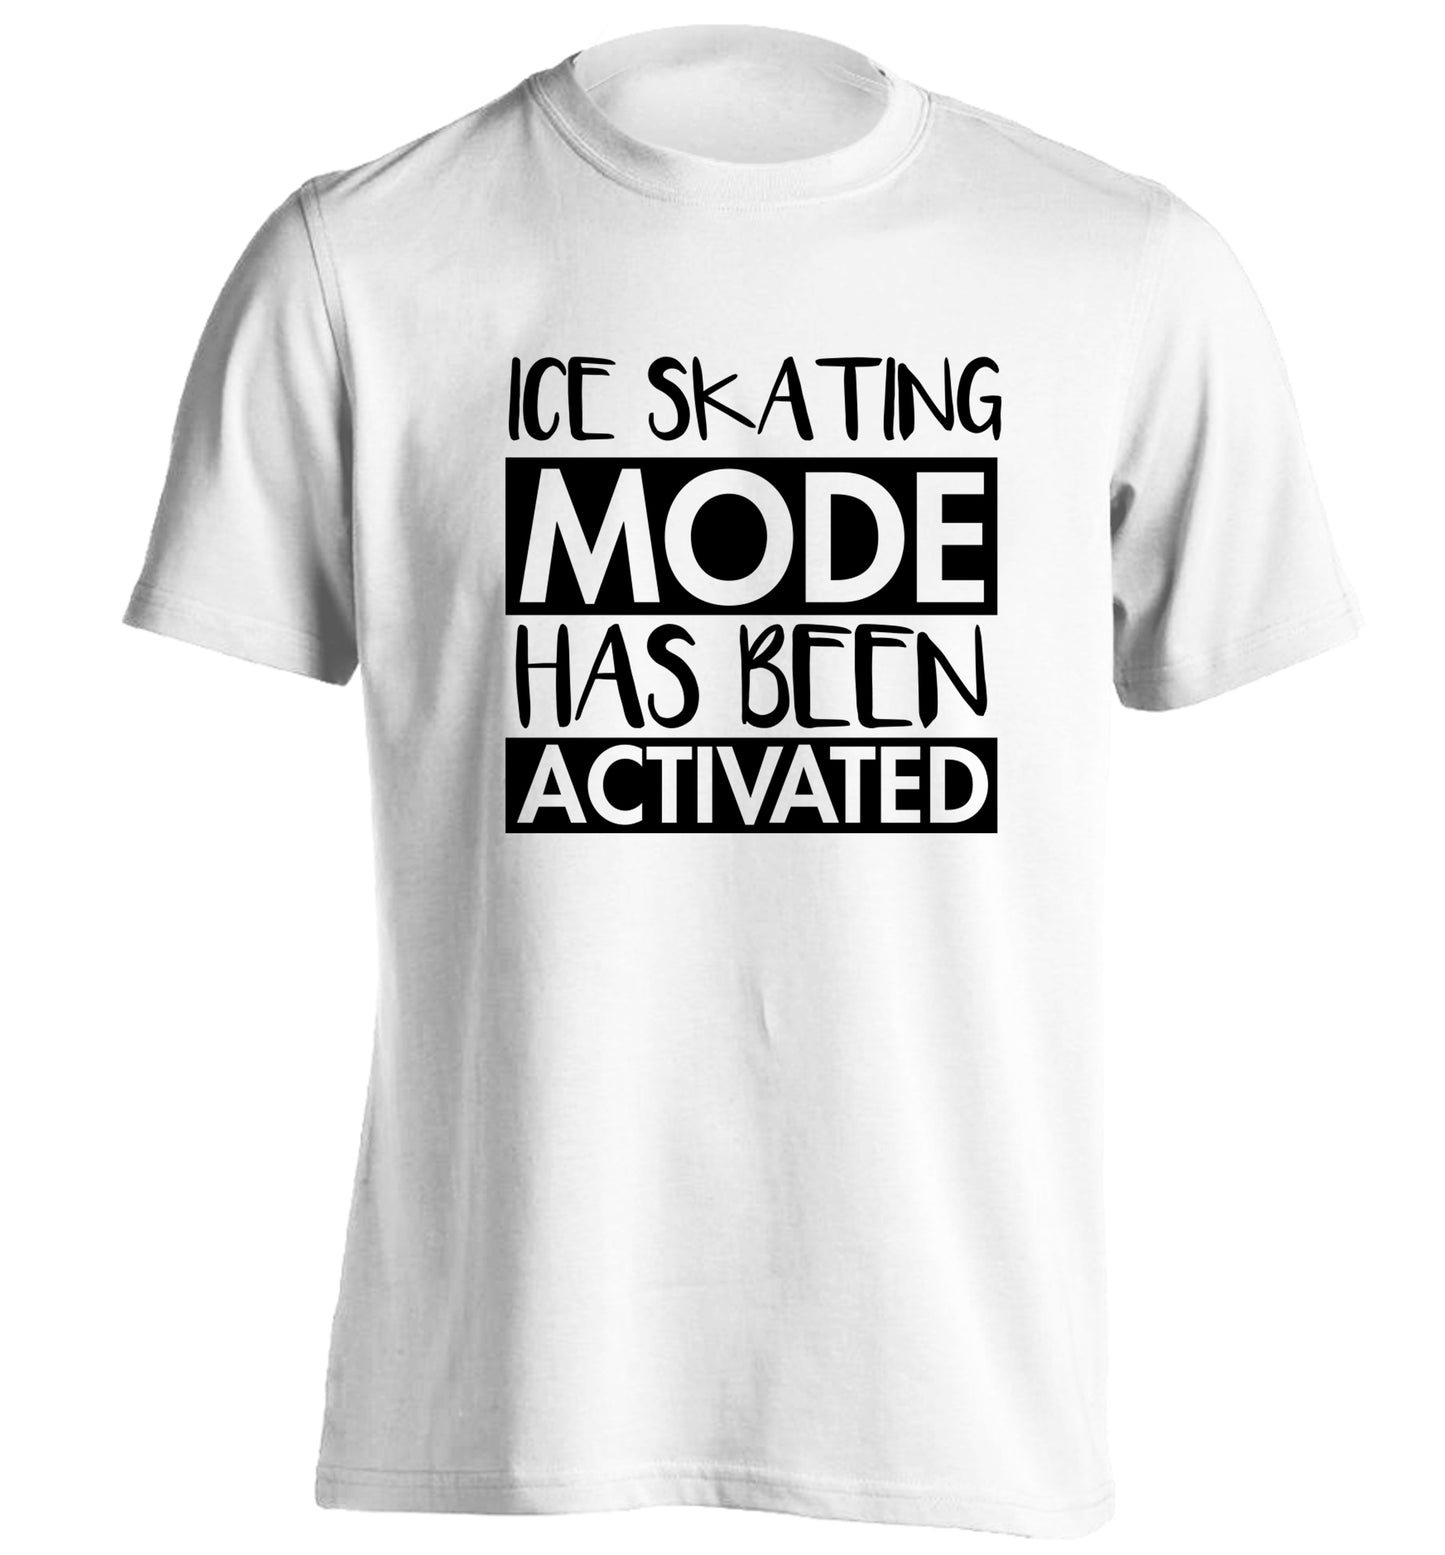 Ice skating mode activated adults unisexwhite Tshirt 2XL